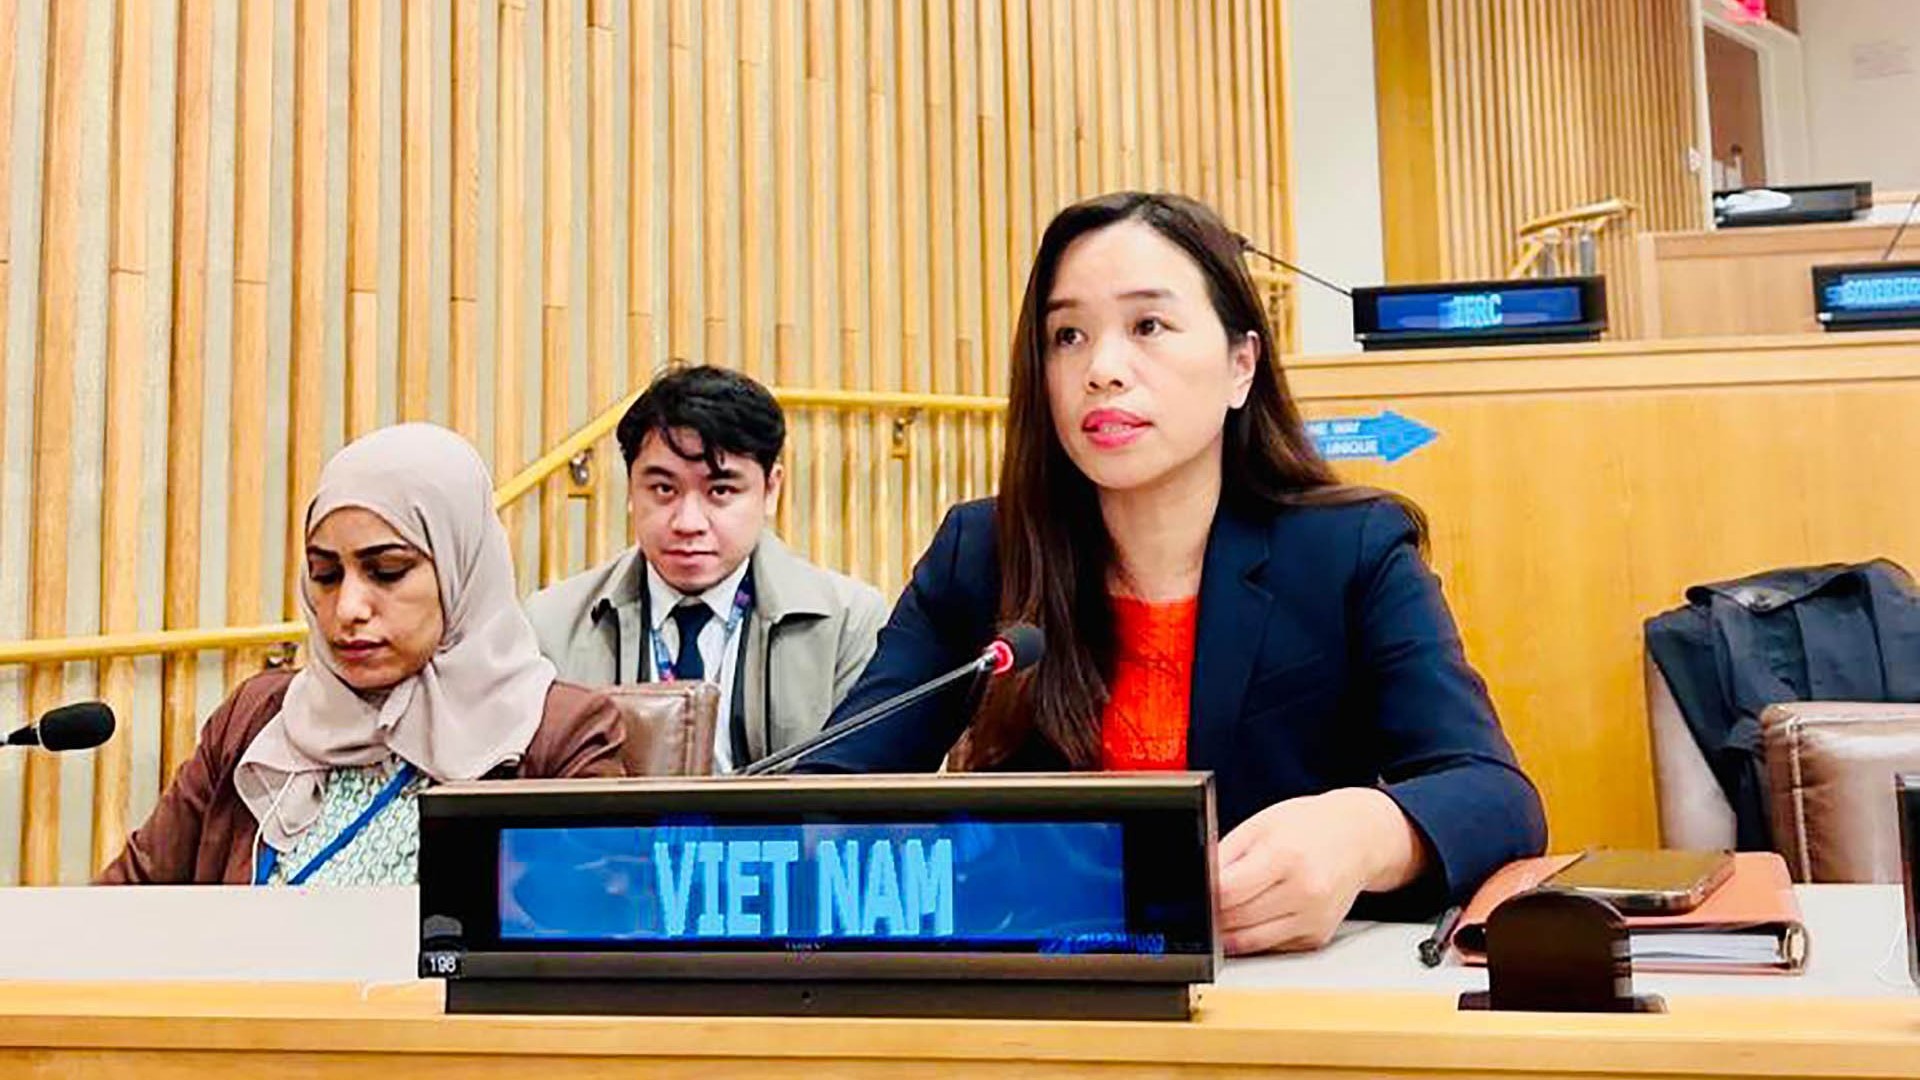 Gender equality always respected in Vietnam’s national policies